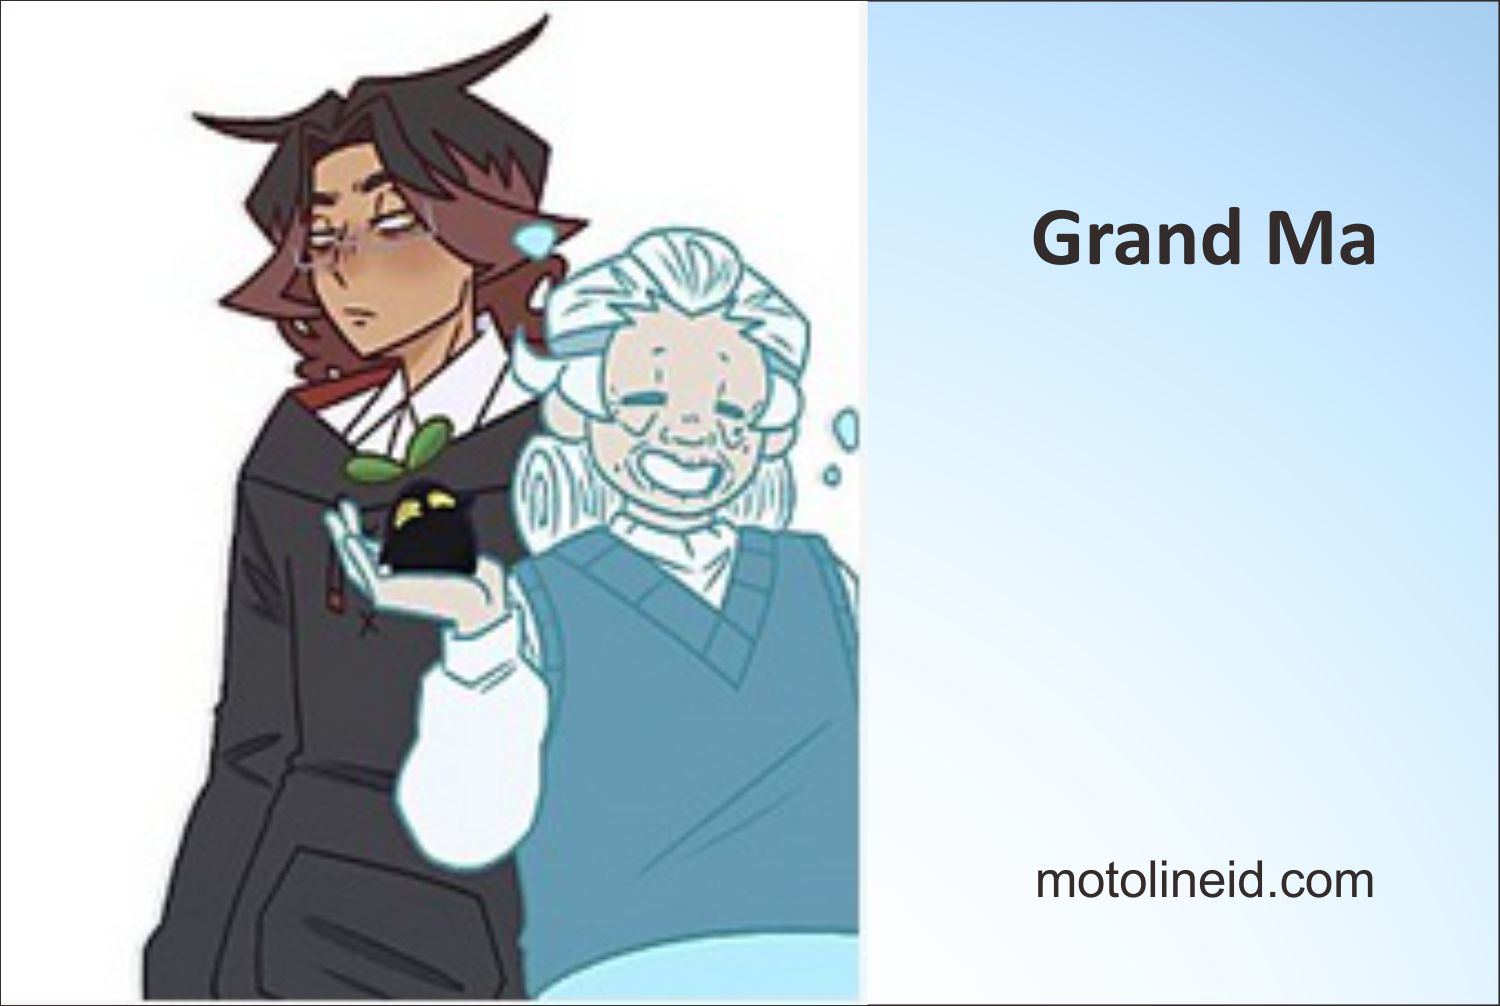 Grand Ma Epiosode 4 Online Comic Sub Title English - Motolineid